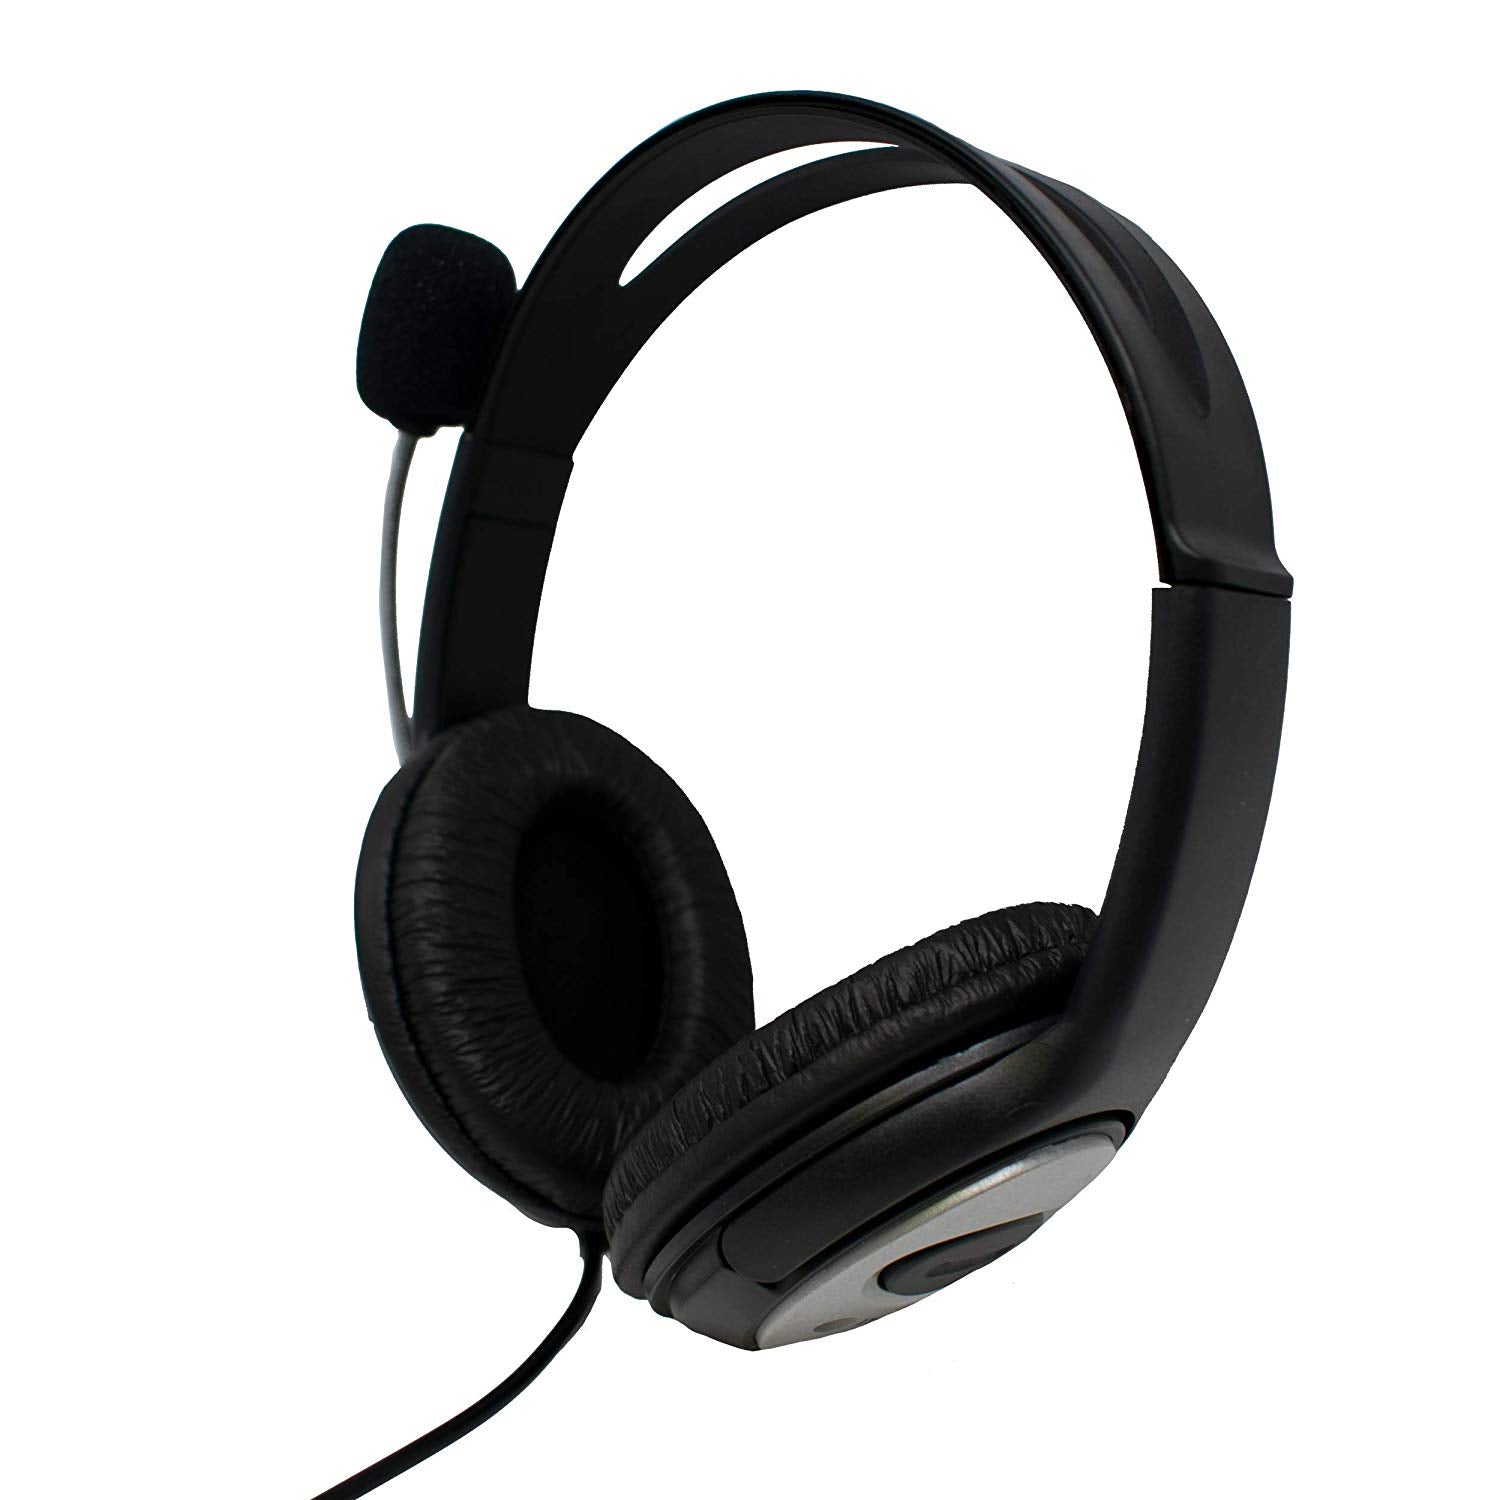 Stereo Headset & Microphone - Full Ear - 3.5mm Jack/s